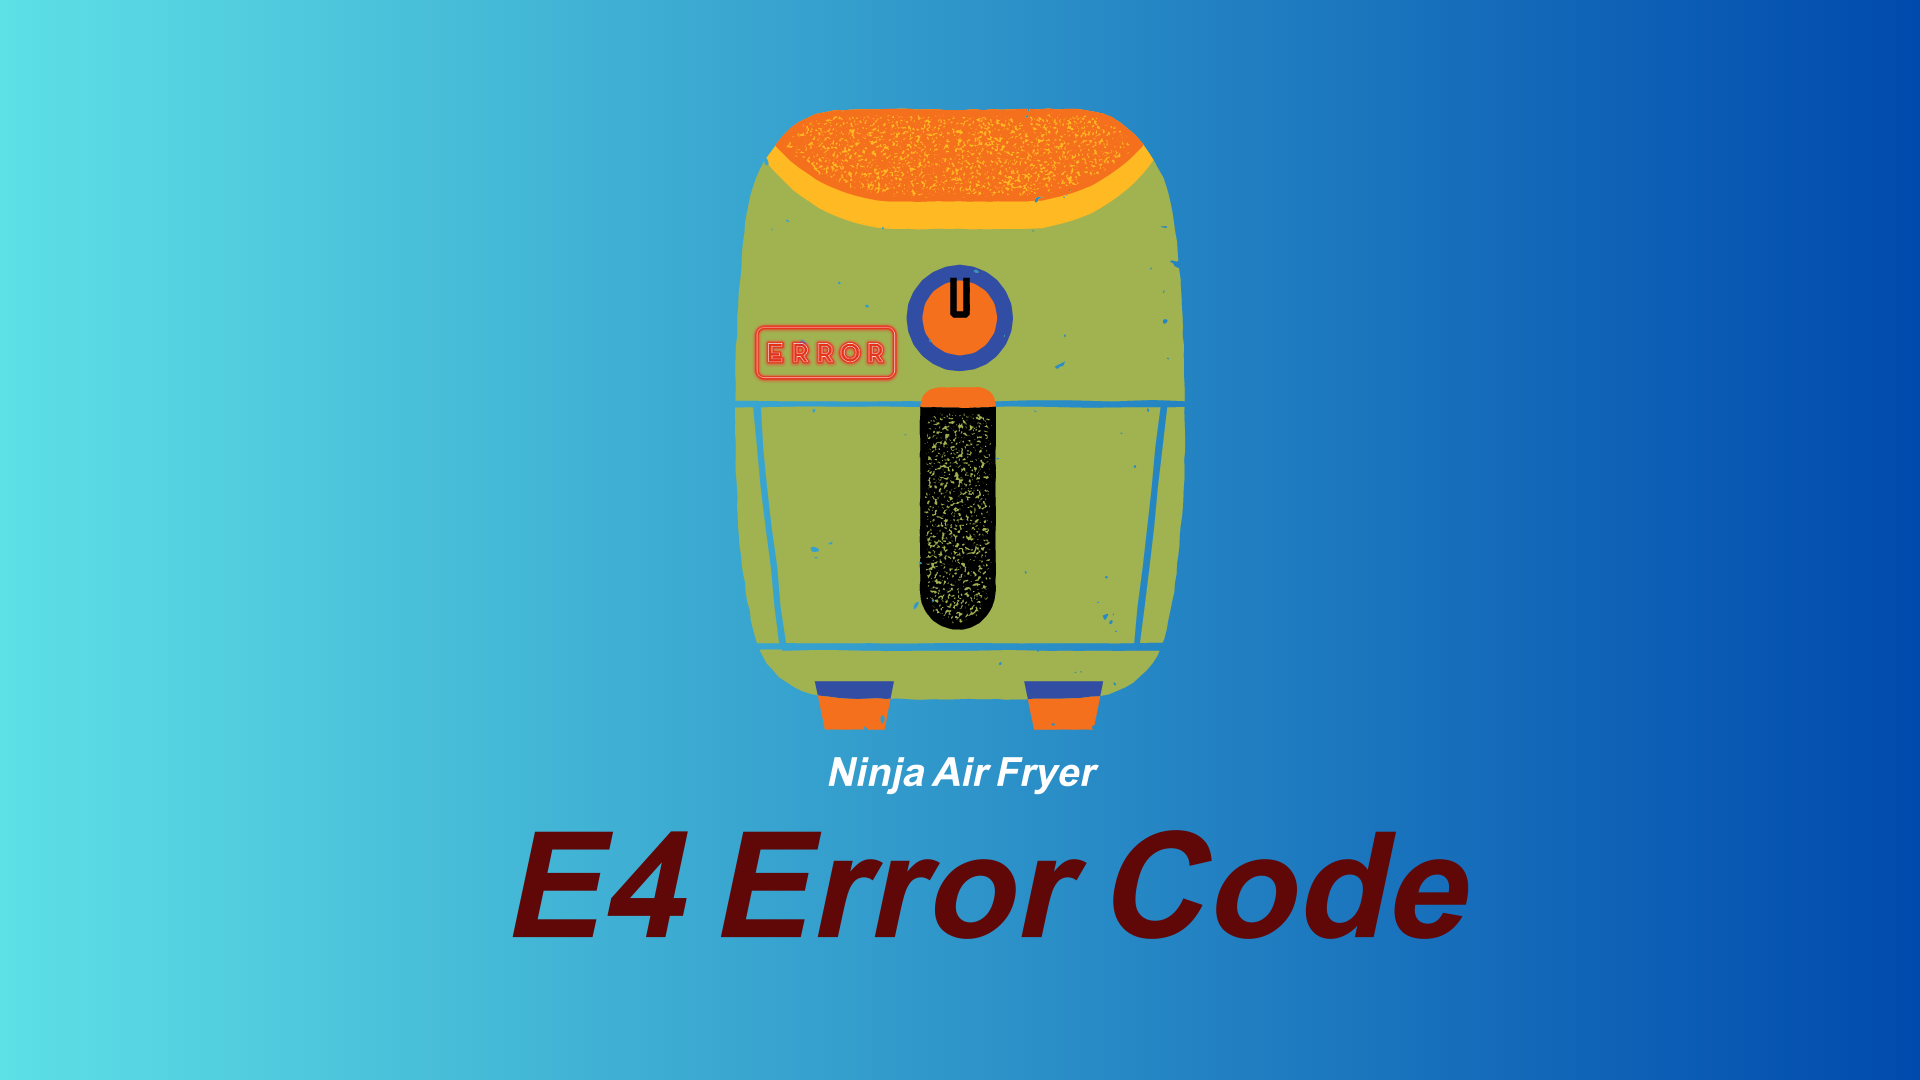 Ninja Air Fryer E4 Error Code